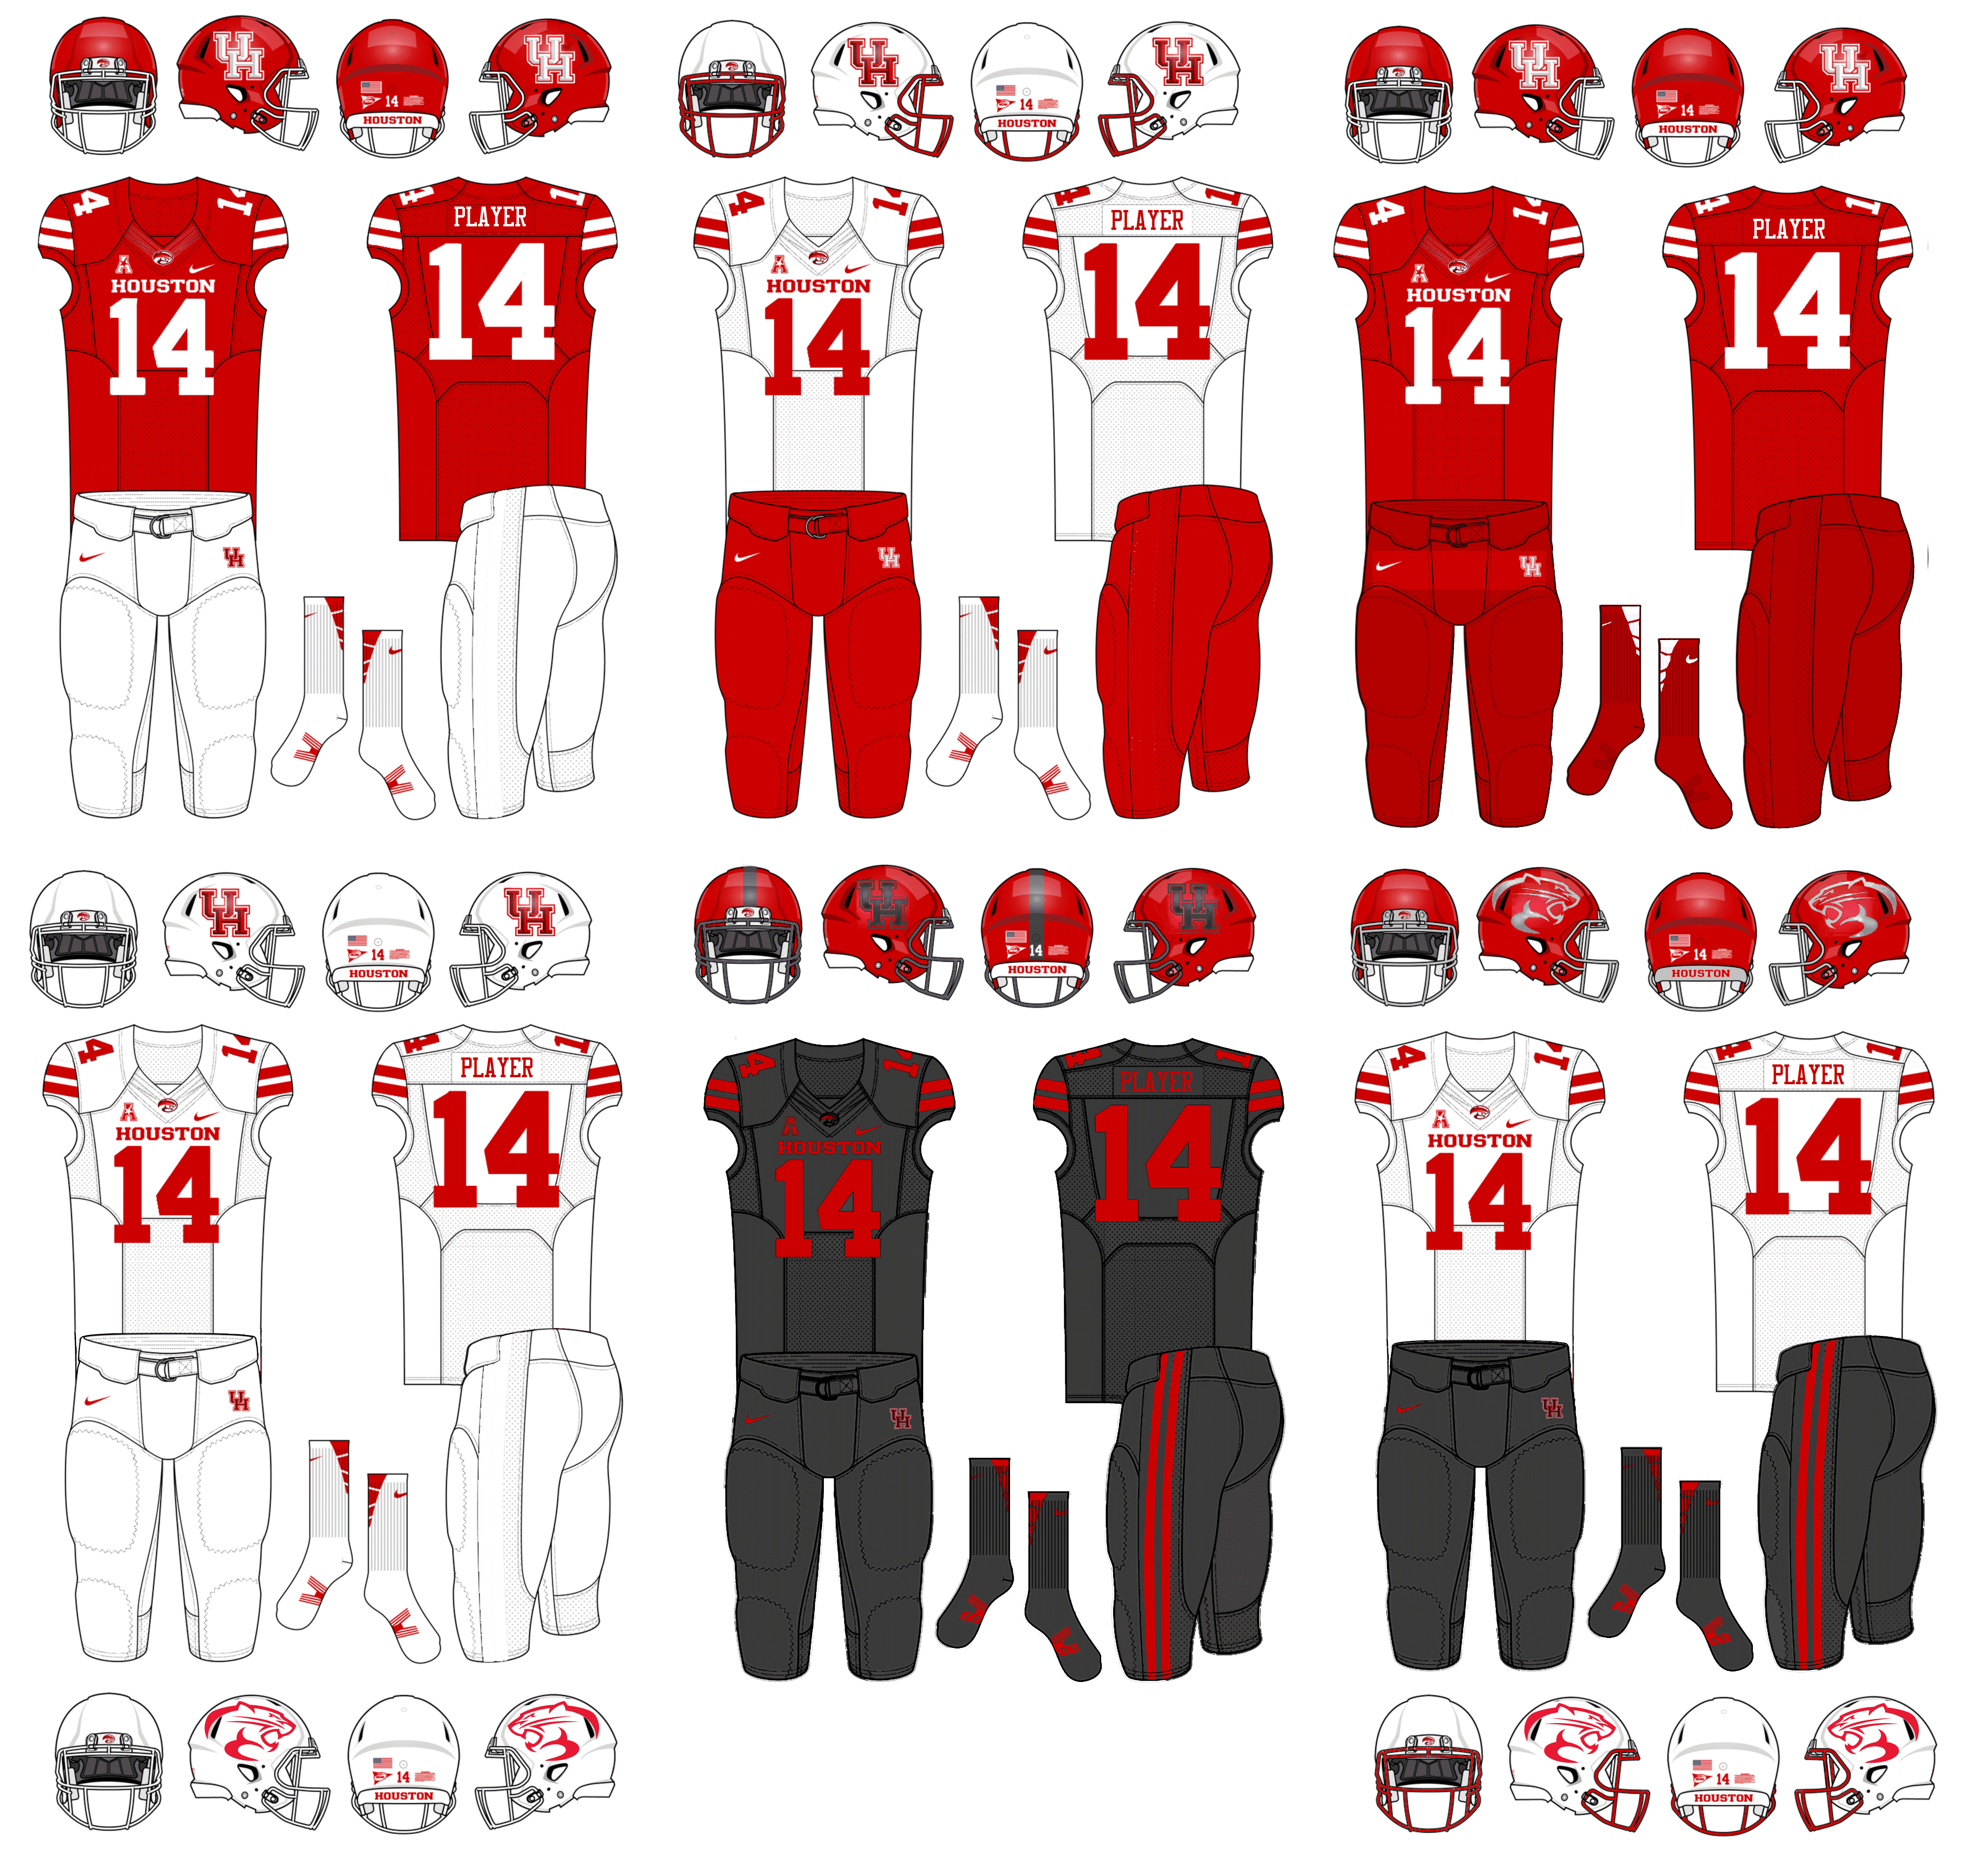 University of Houston Jerseys, Houston Cougars Football Uniforms